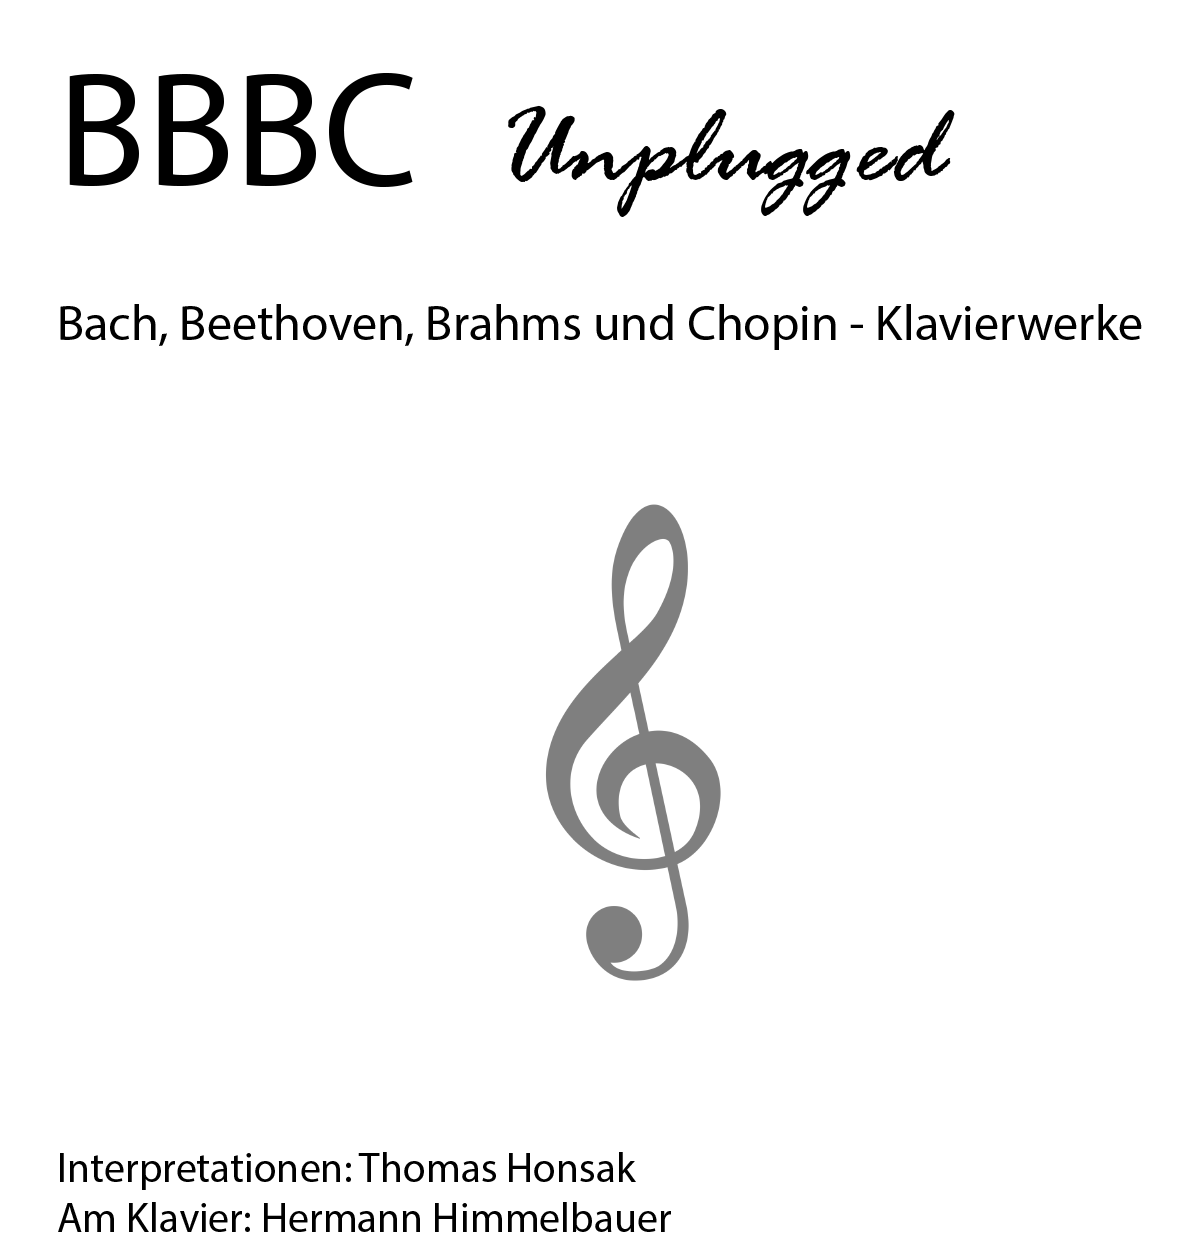 BBBC unplugged